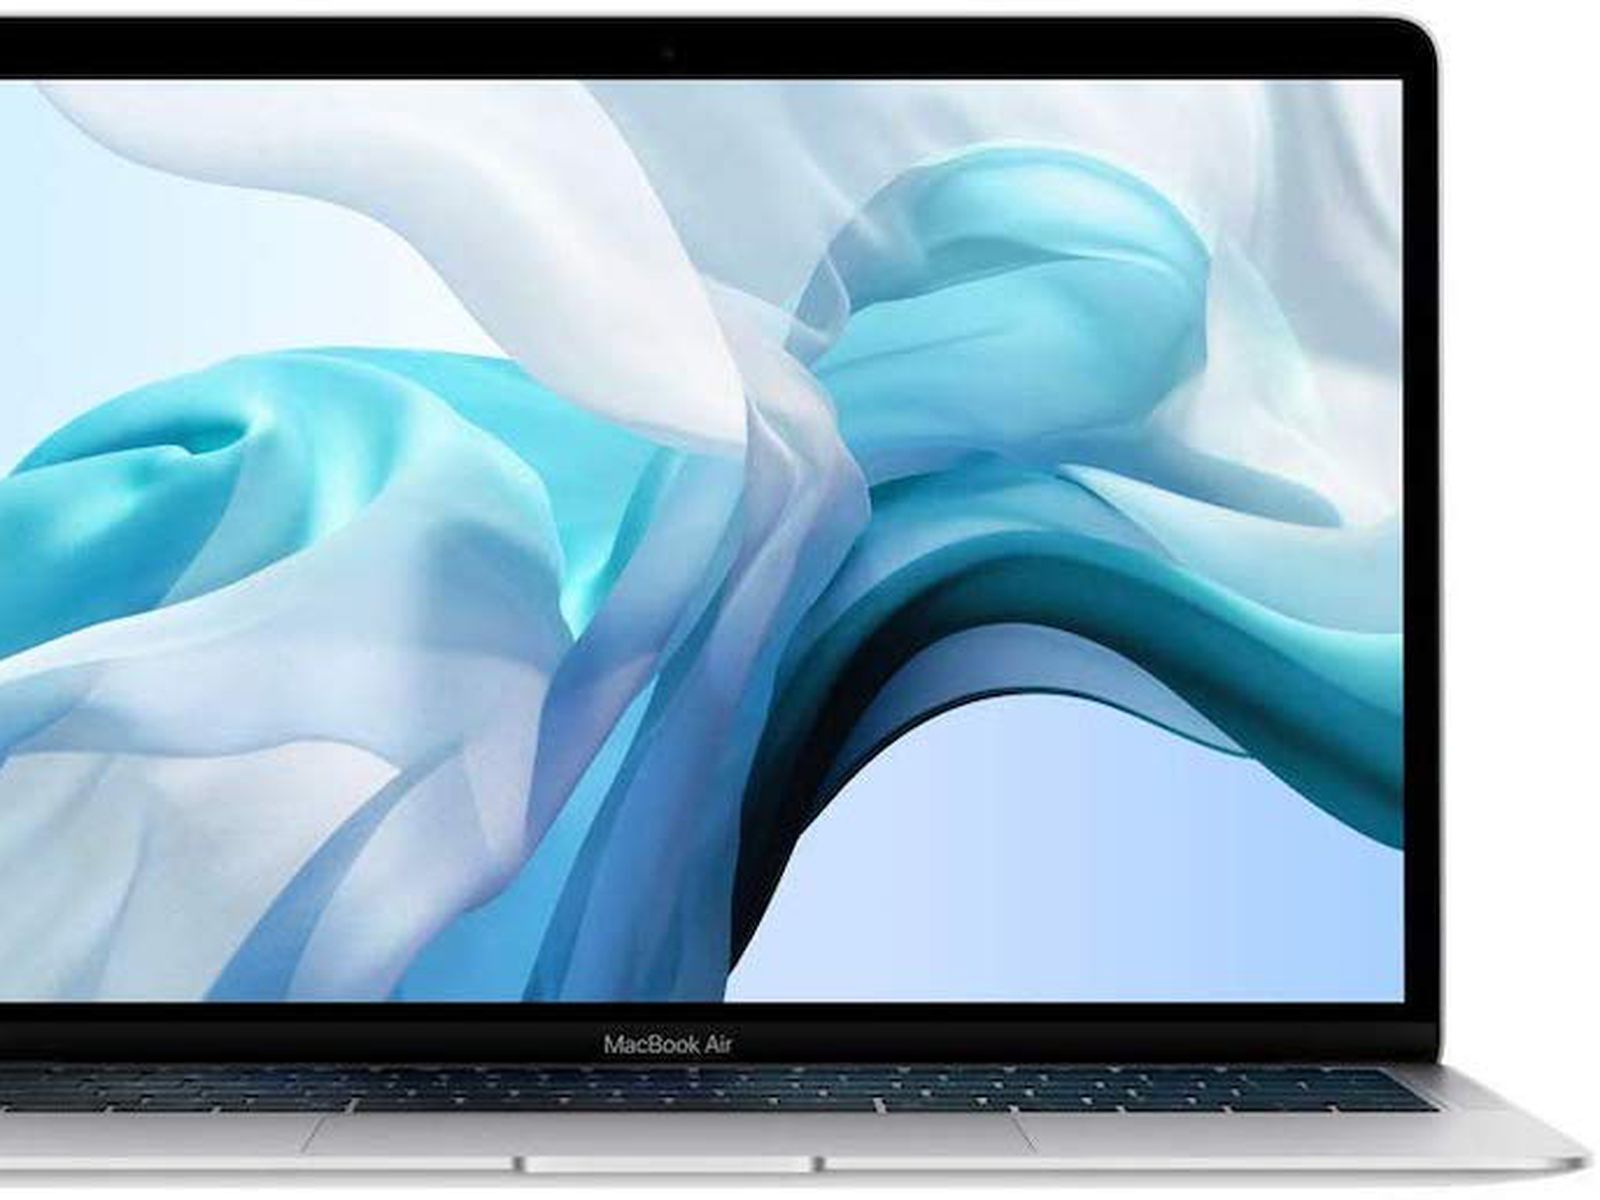 Deals Spotlight: Shop 2019 MacBook Air Discounts Starting at $900